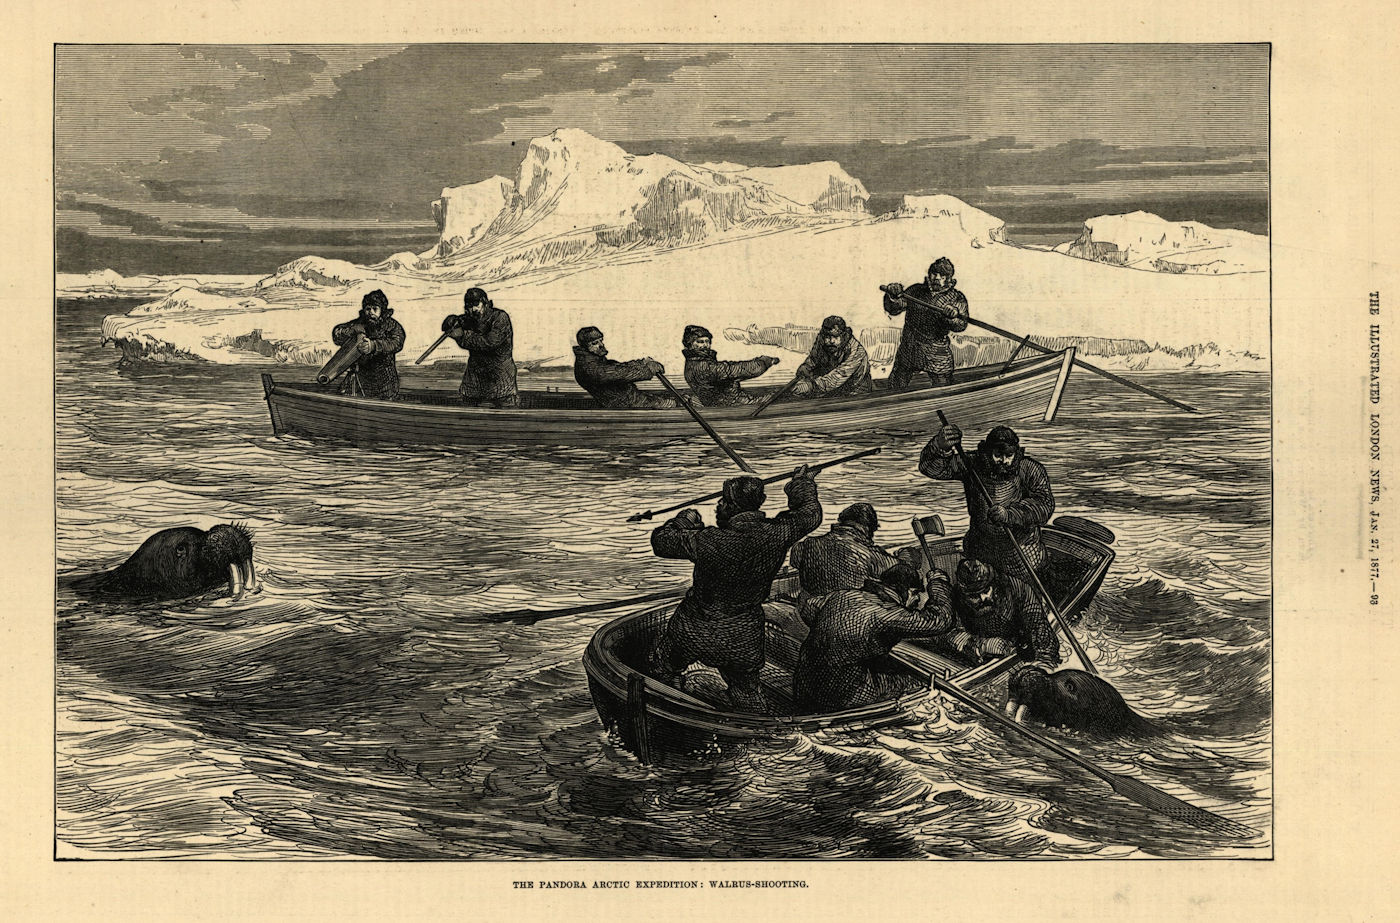 Associate Product The Pandora Arctic Expedition: Walrus-shooting. Explorers 1877 old print